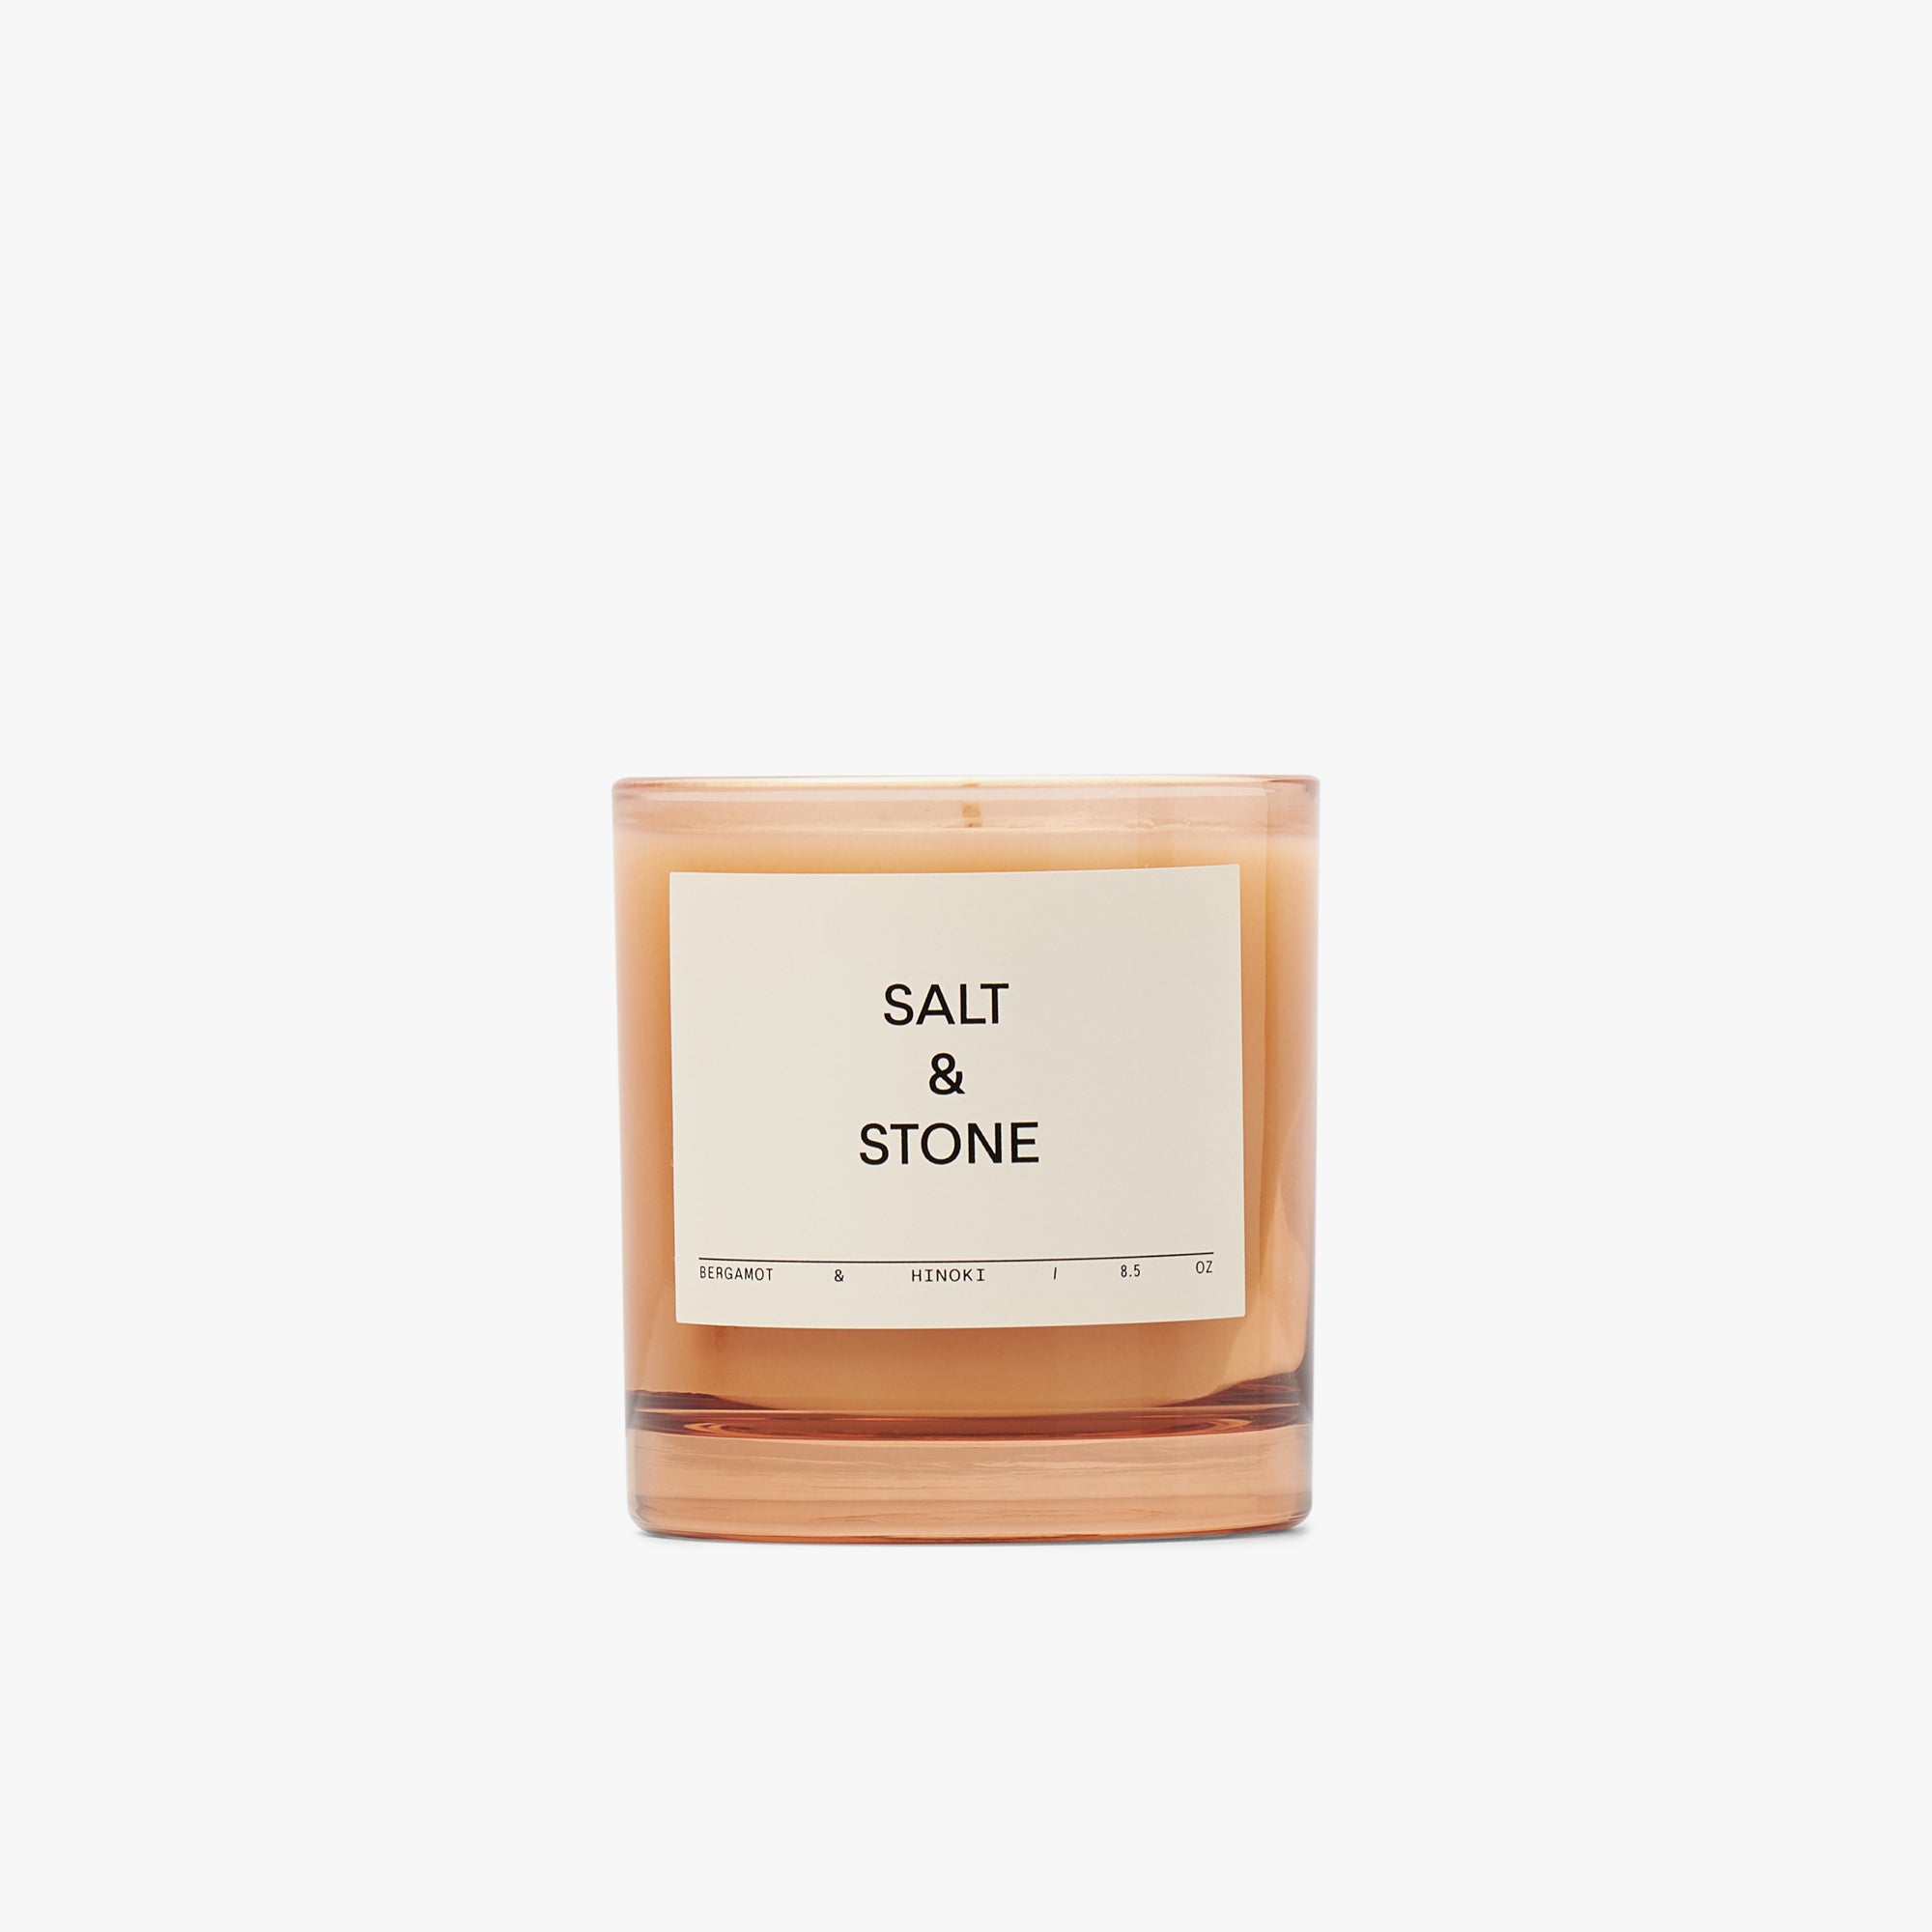 SALT & STONE Candle / Bergamot & Hinoki 1